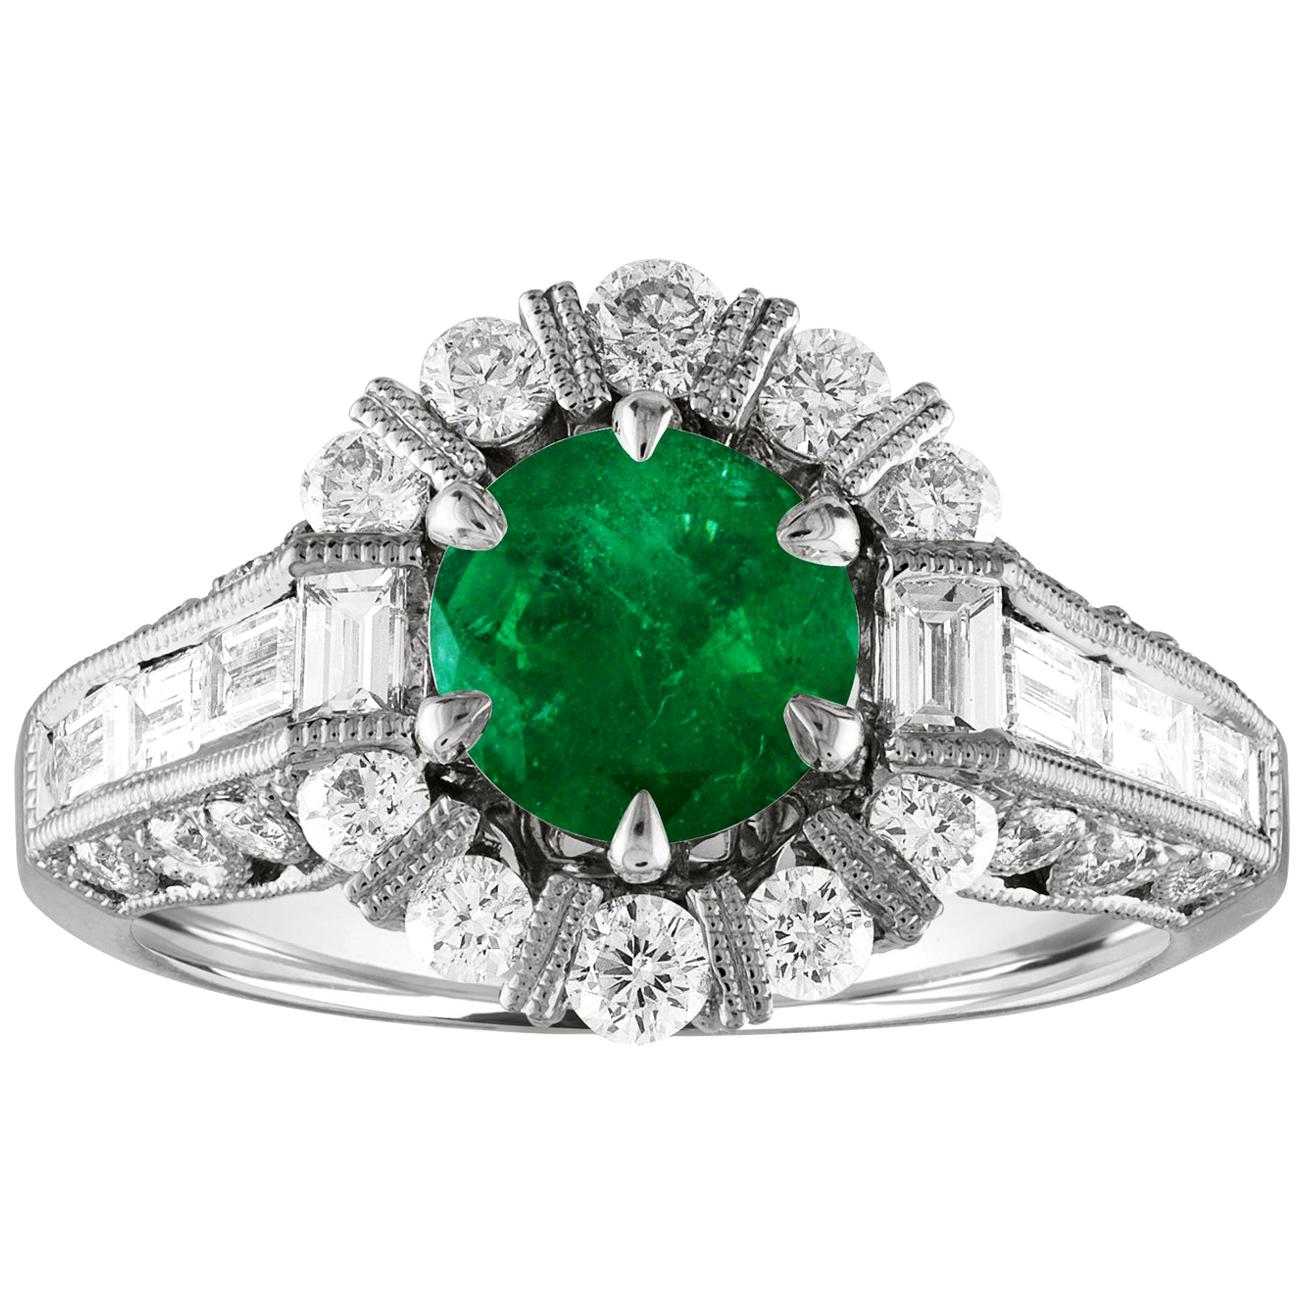 AGL Certified 1.48 Carat Round Emerald Diamond Gold Milgrain Ring